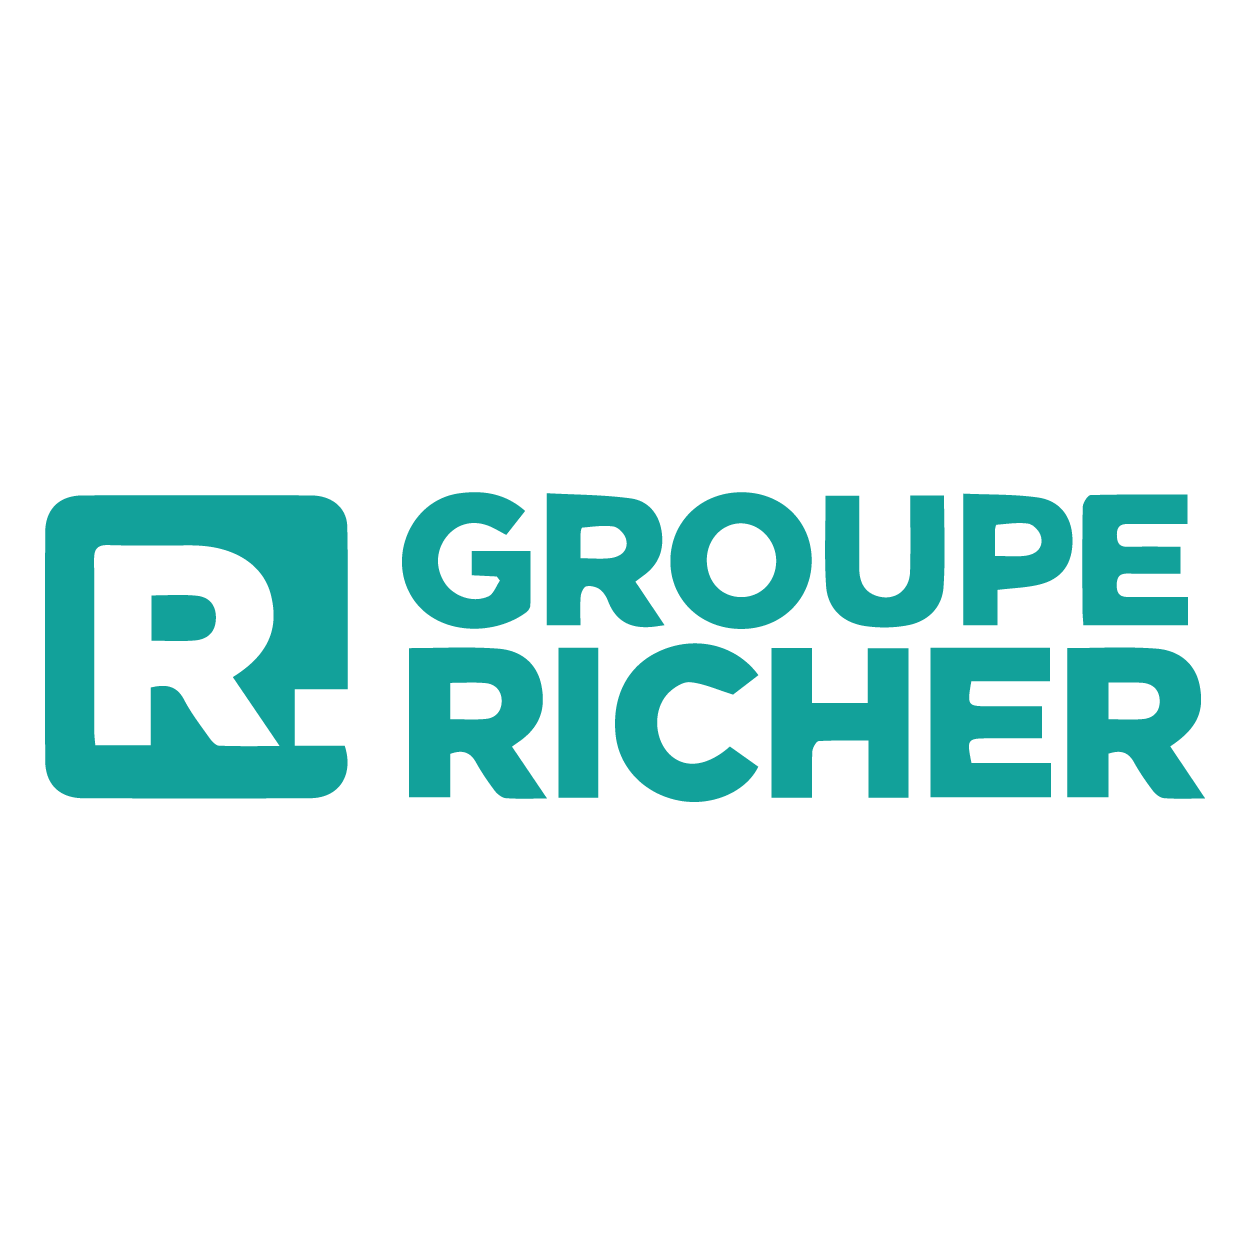 Groupe Richer